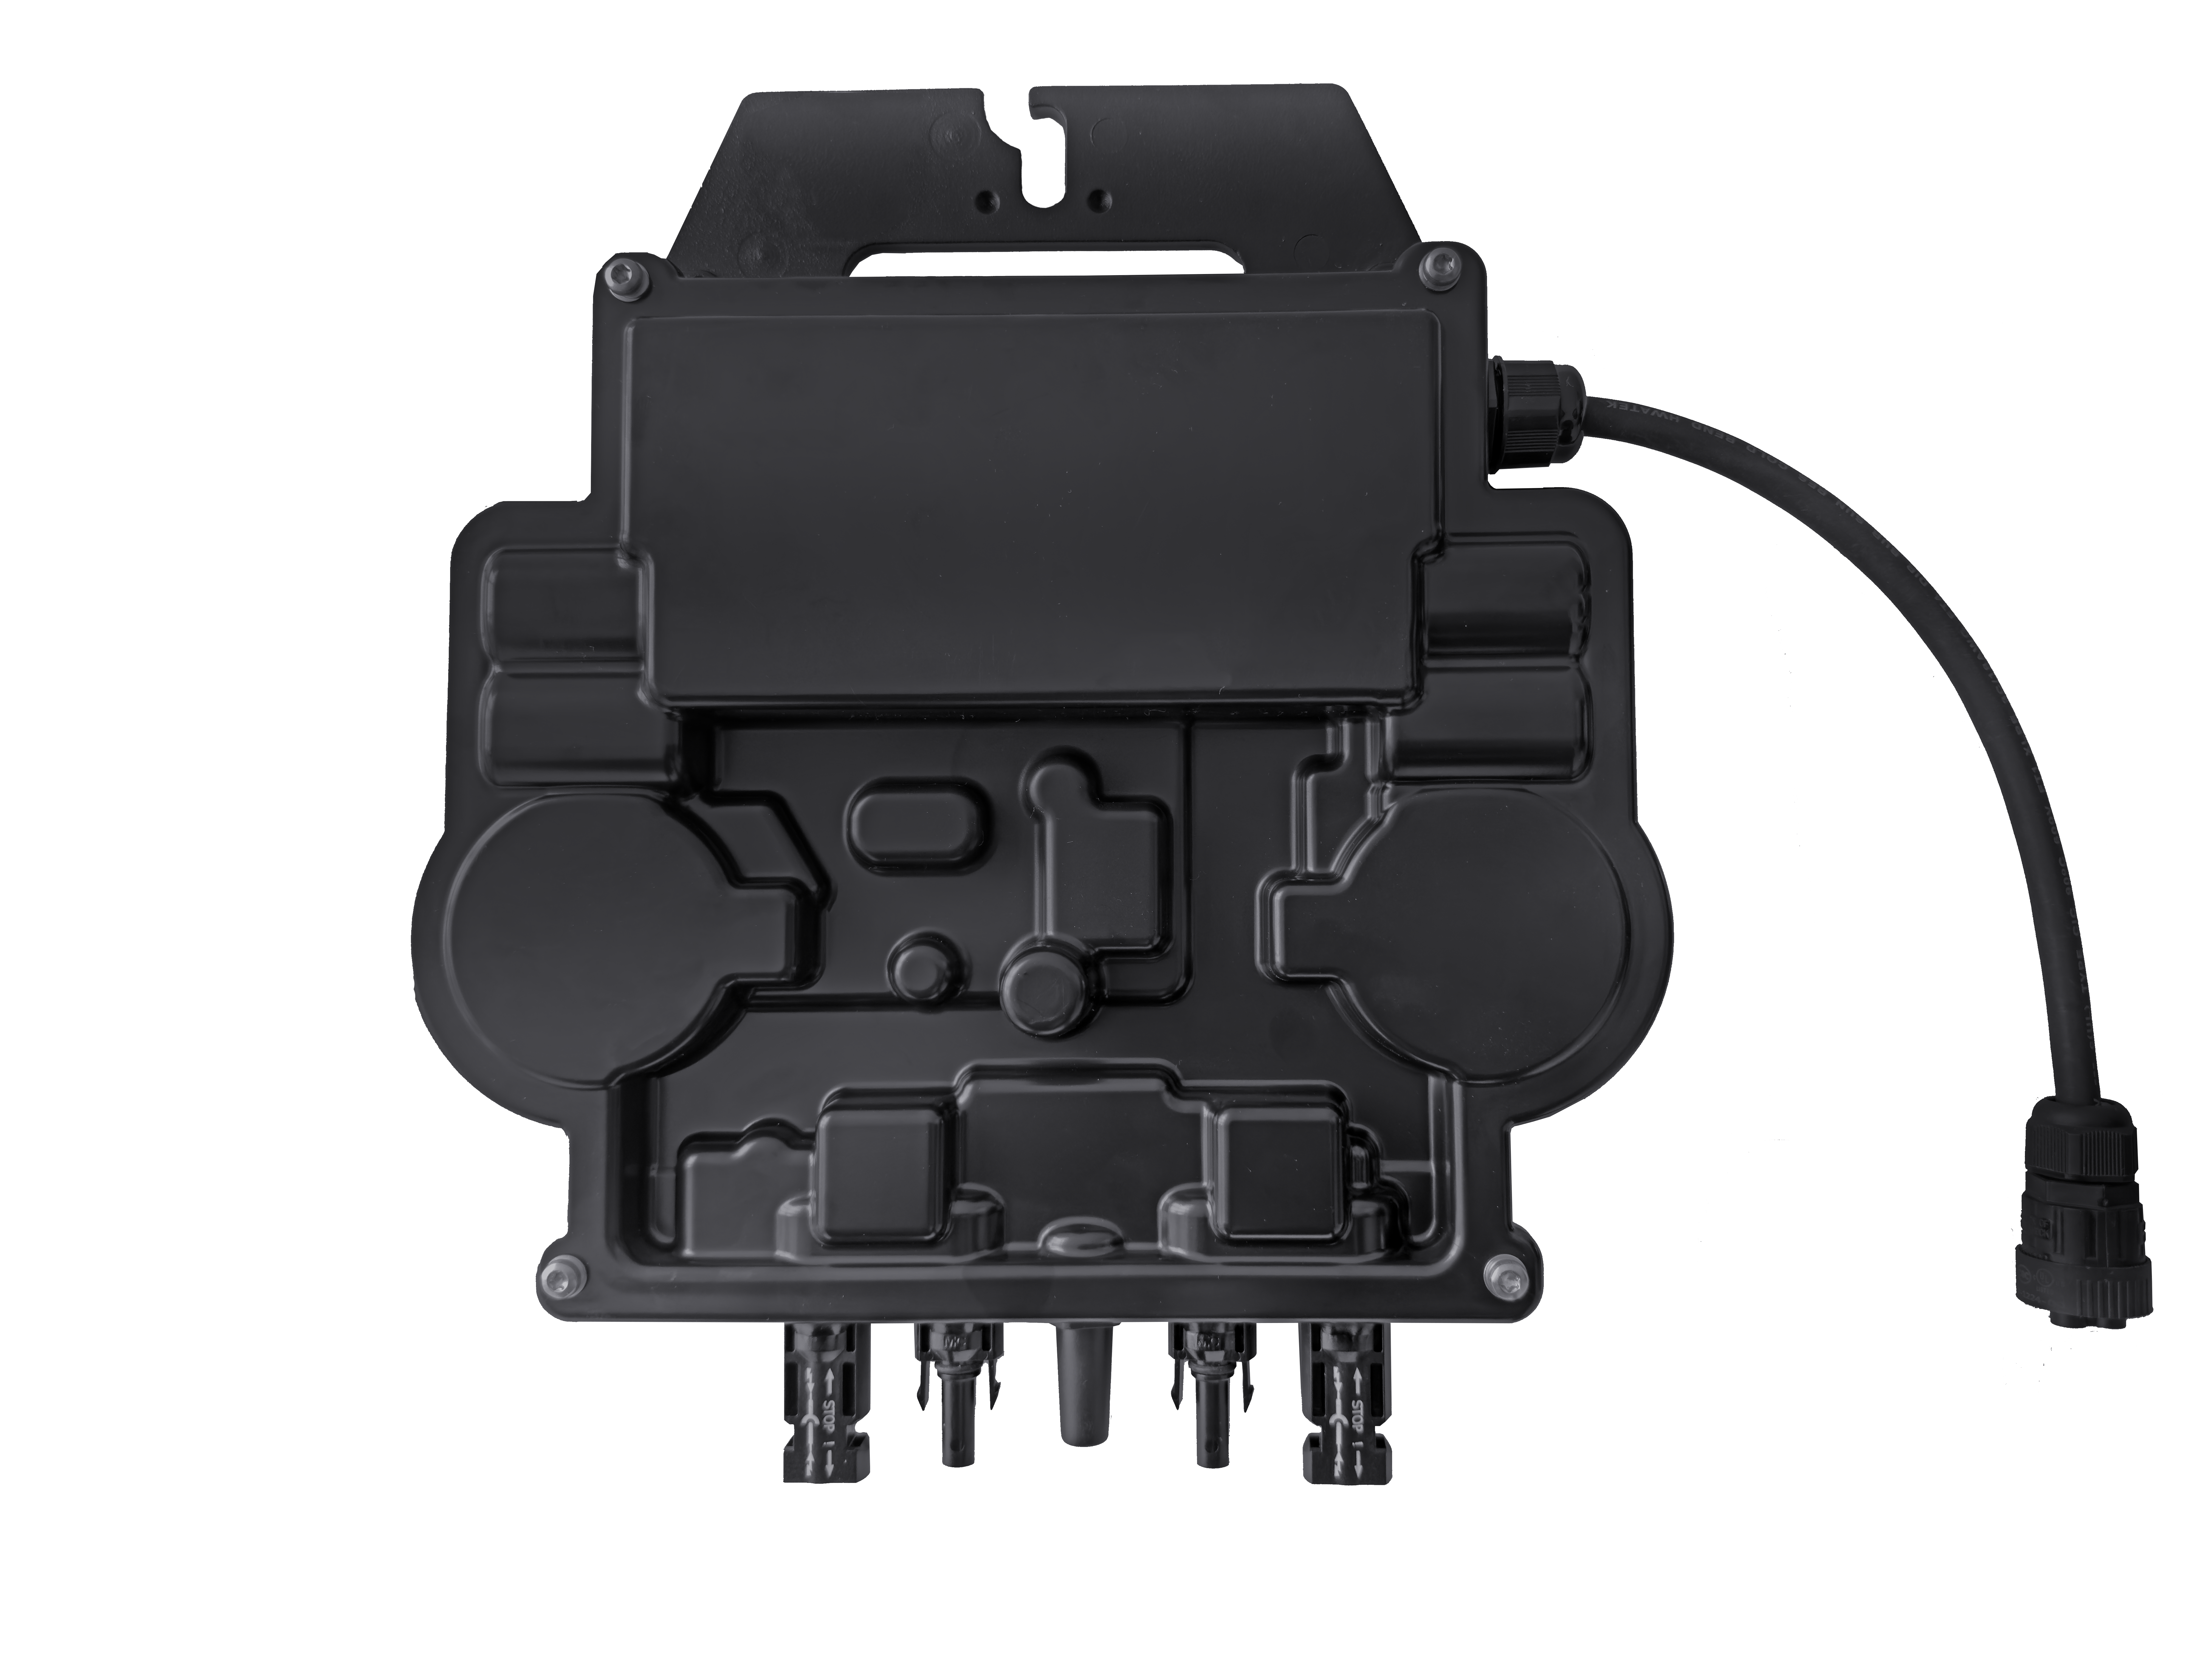 APsystems EZ1-M — 600 W / 800 W Mikrowechselrichter / ohne Kabel